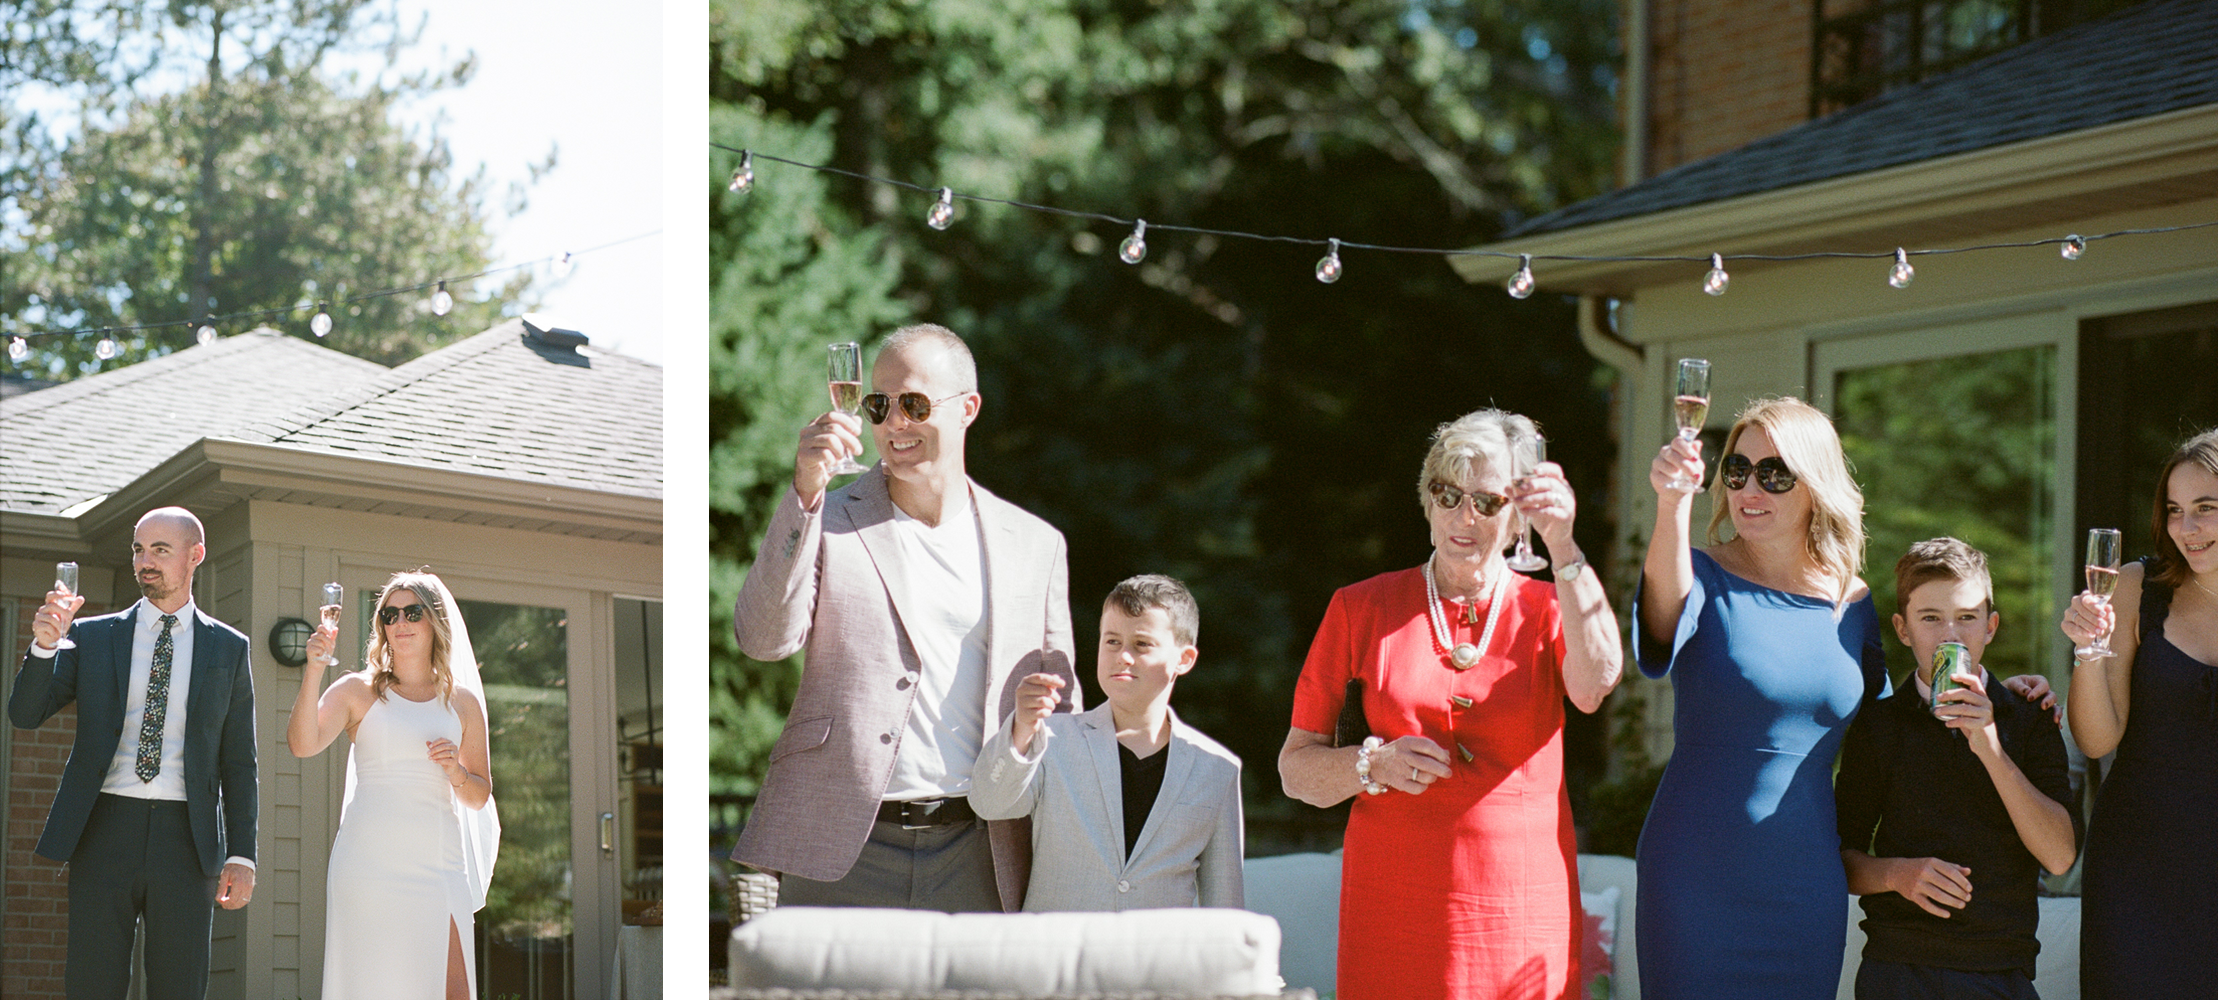 Analog-Film-Micro-Wedding-Photos-Inspiration-Backyard-Toronto-Ontario-55.PNG